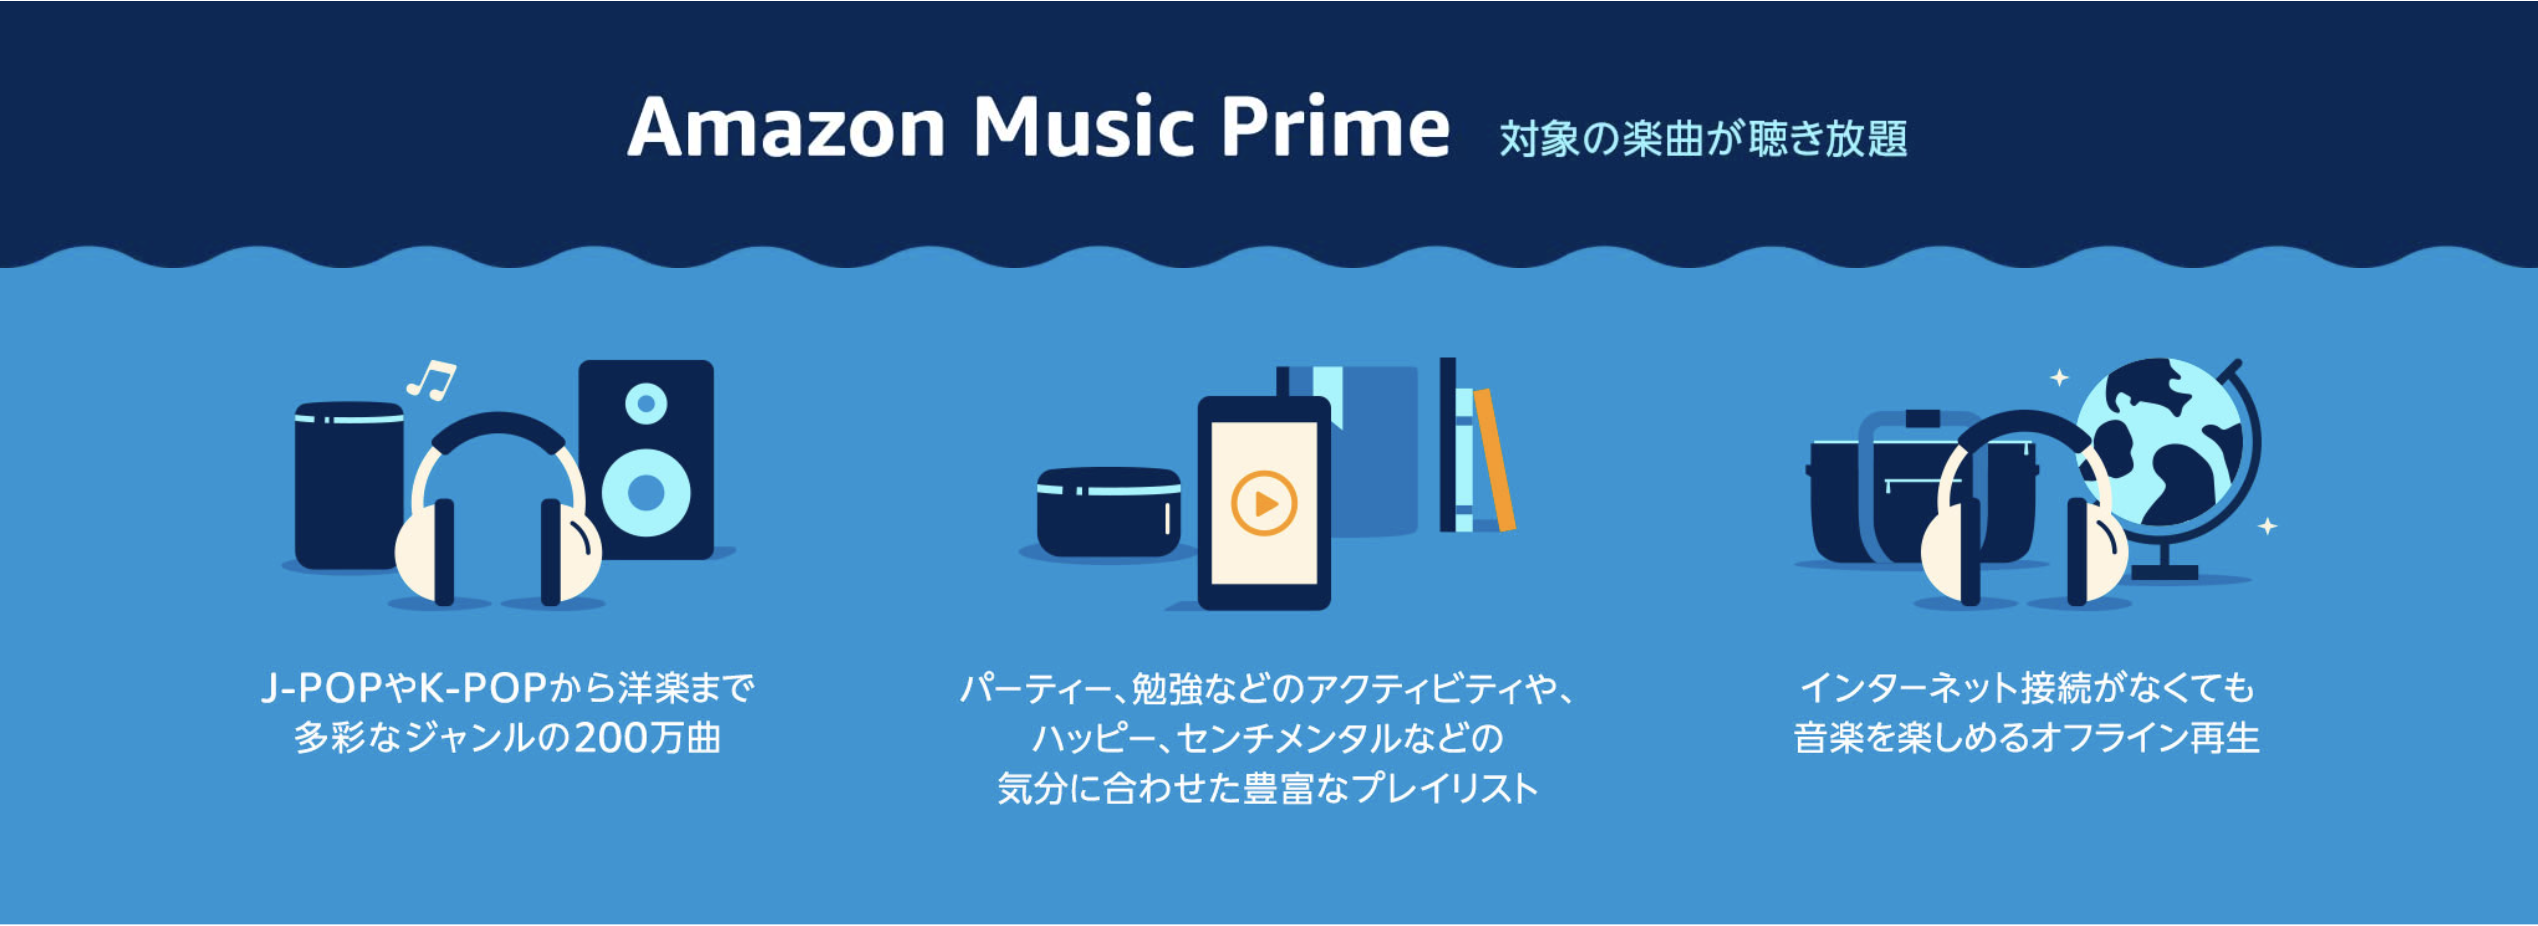 Amazon Music prime